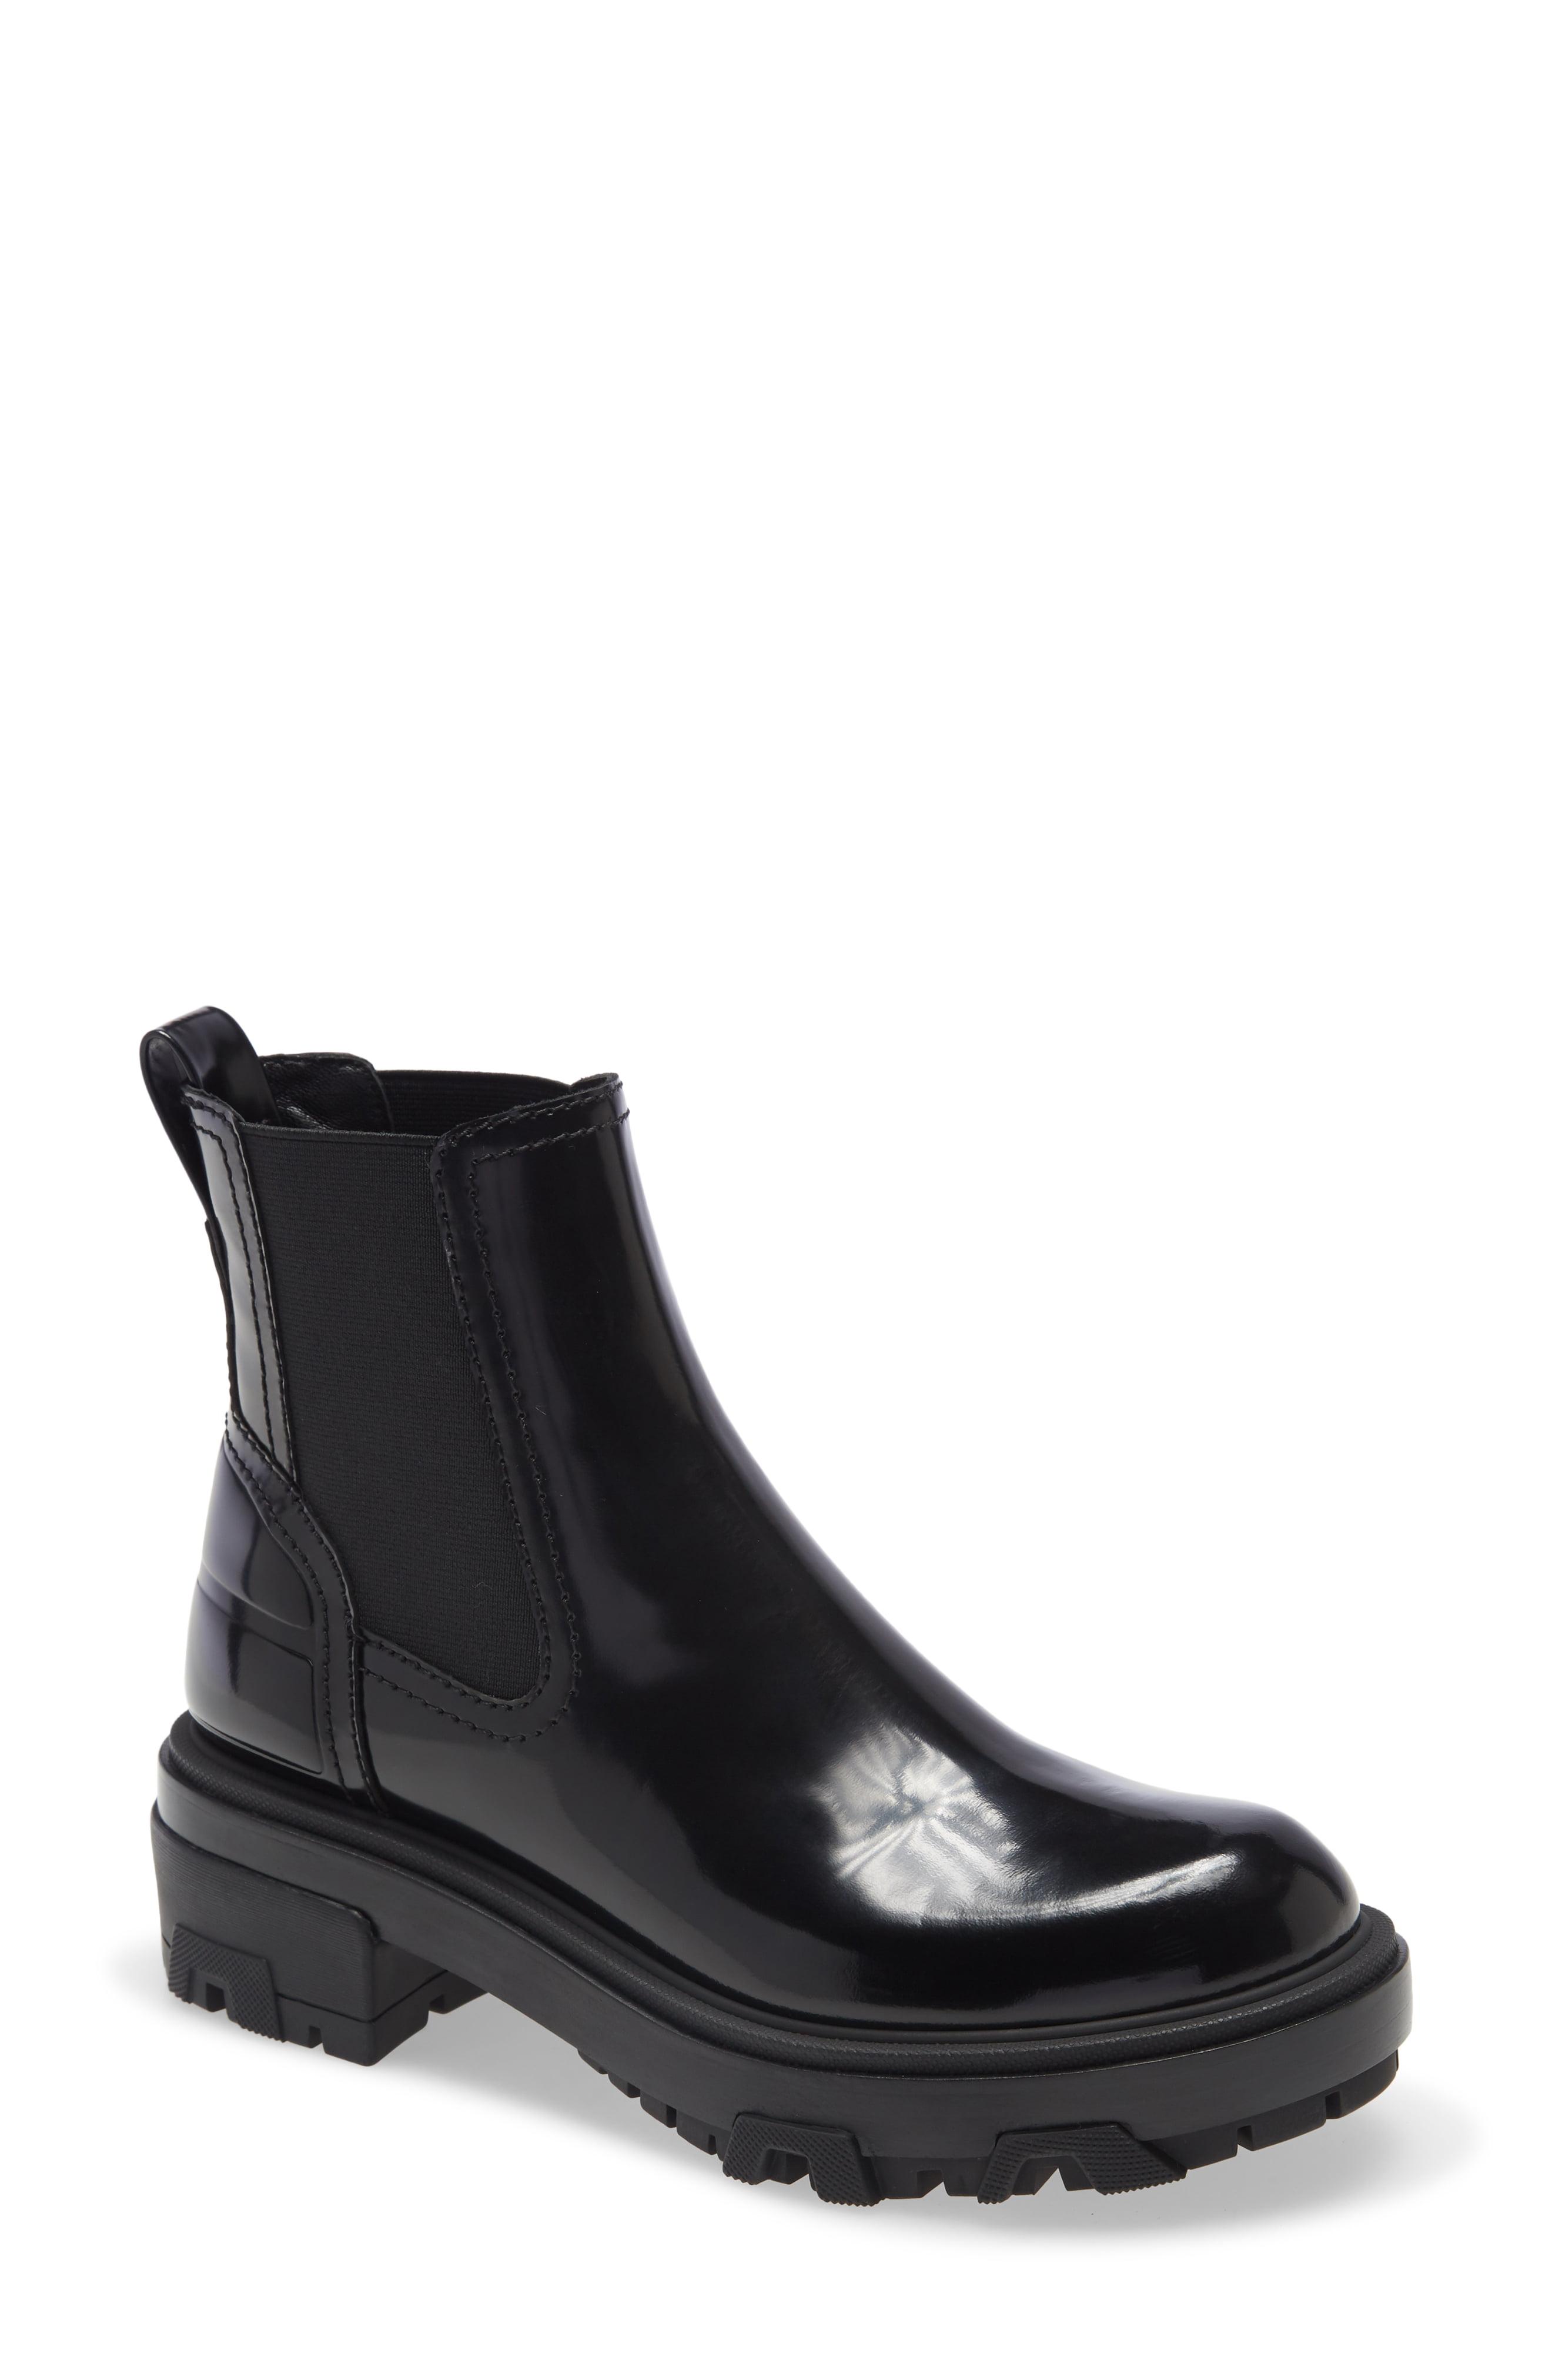 Rag & Bone Shaye Lug Sole Chelsea Boot in Black - Save 5% - Lyst